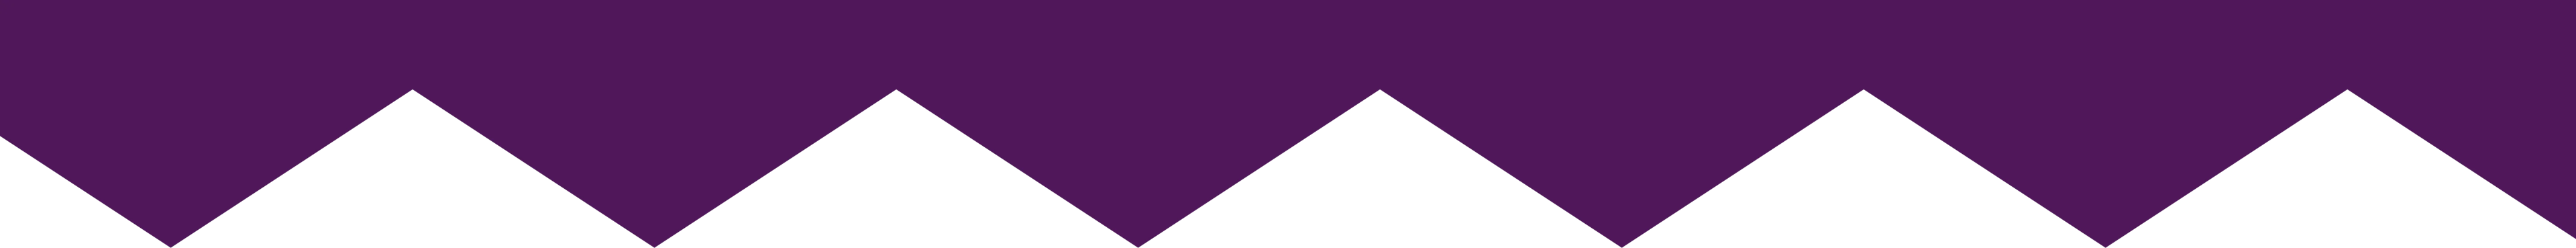 A purple zigzag pattern